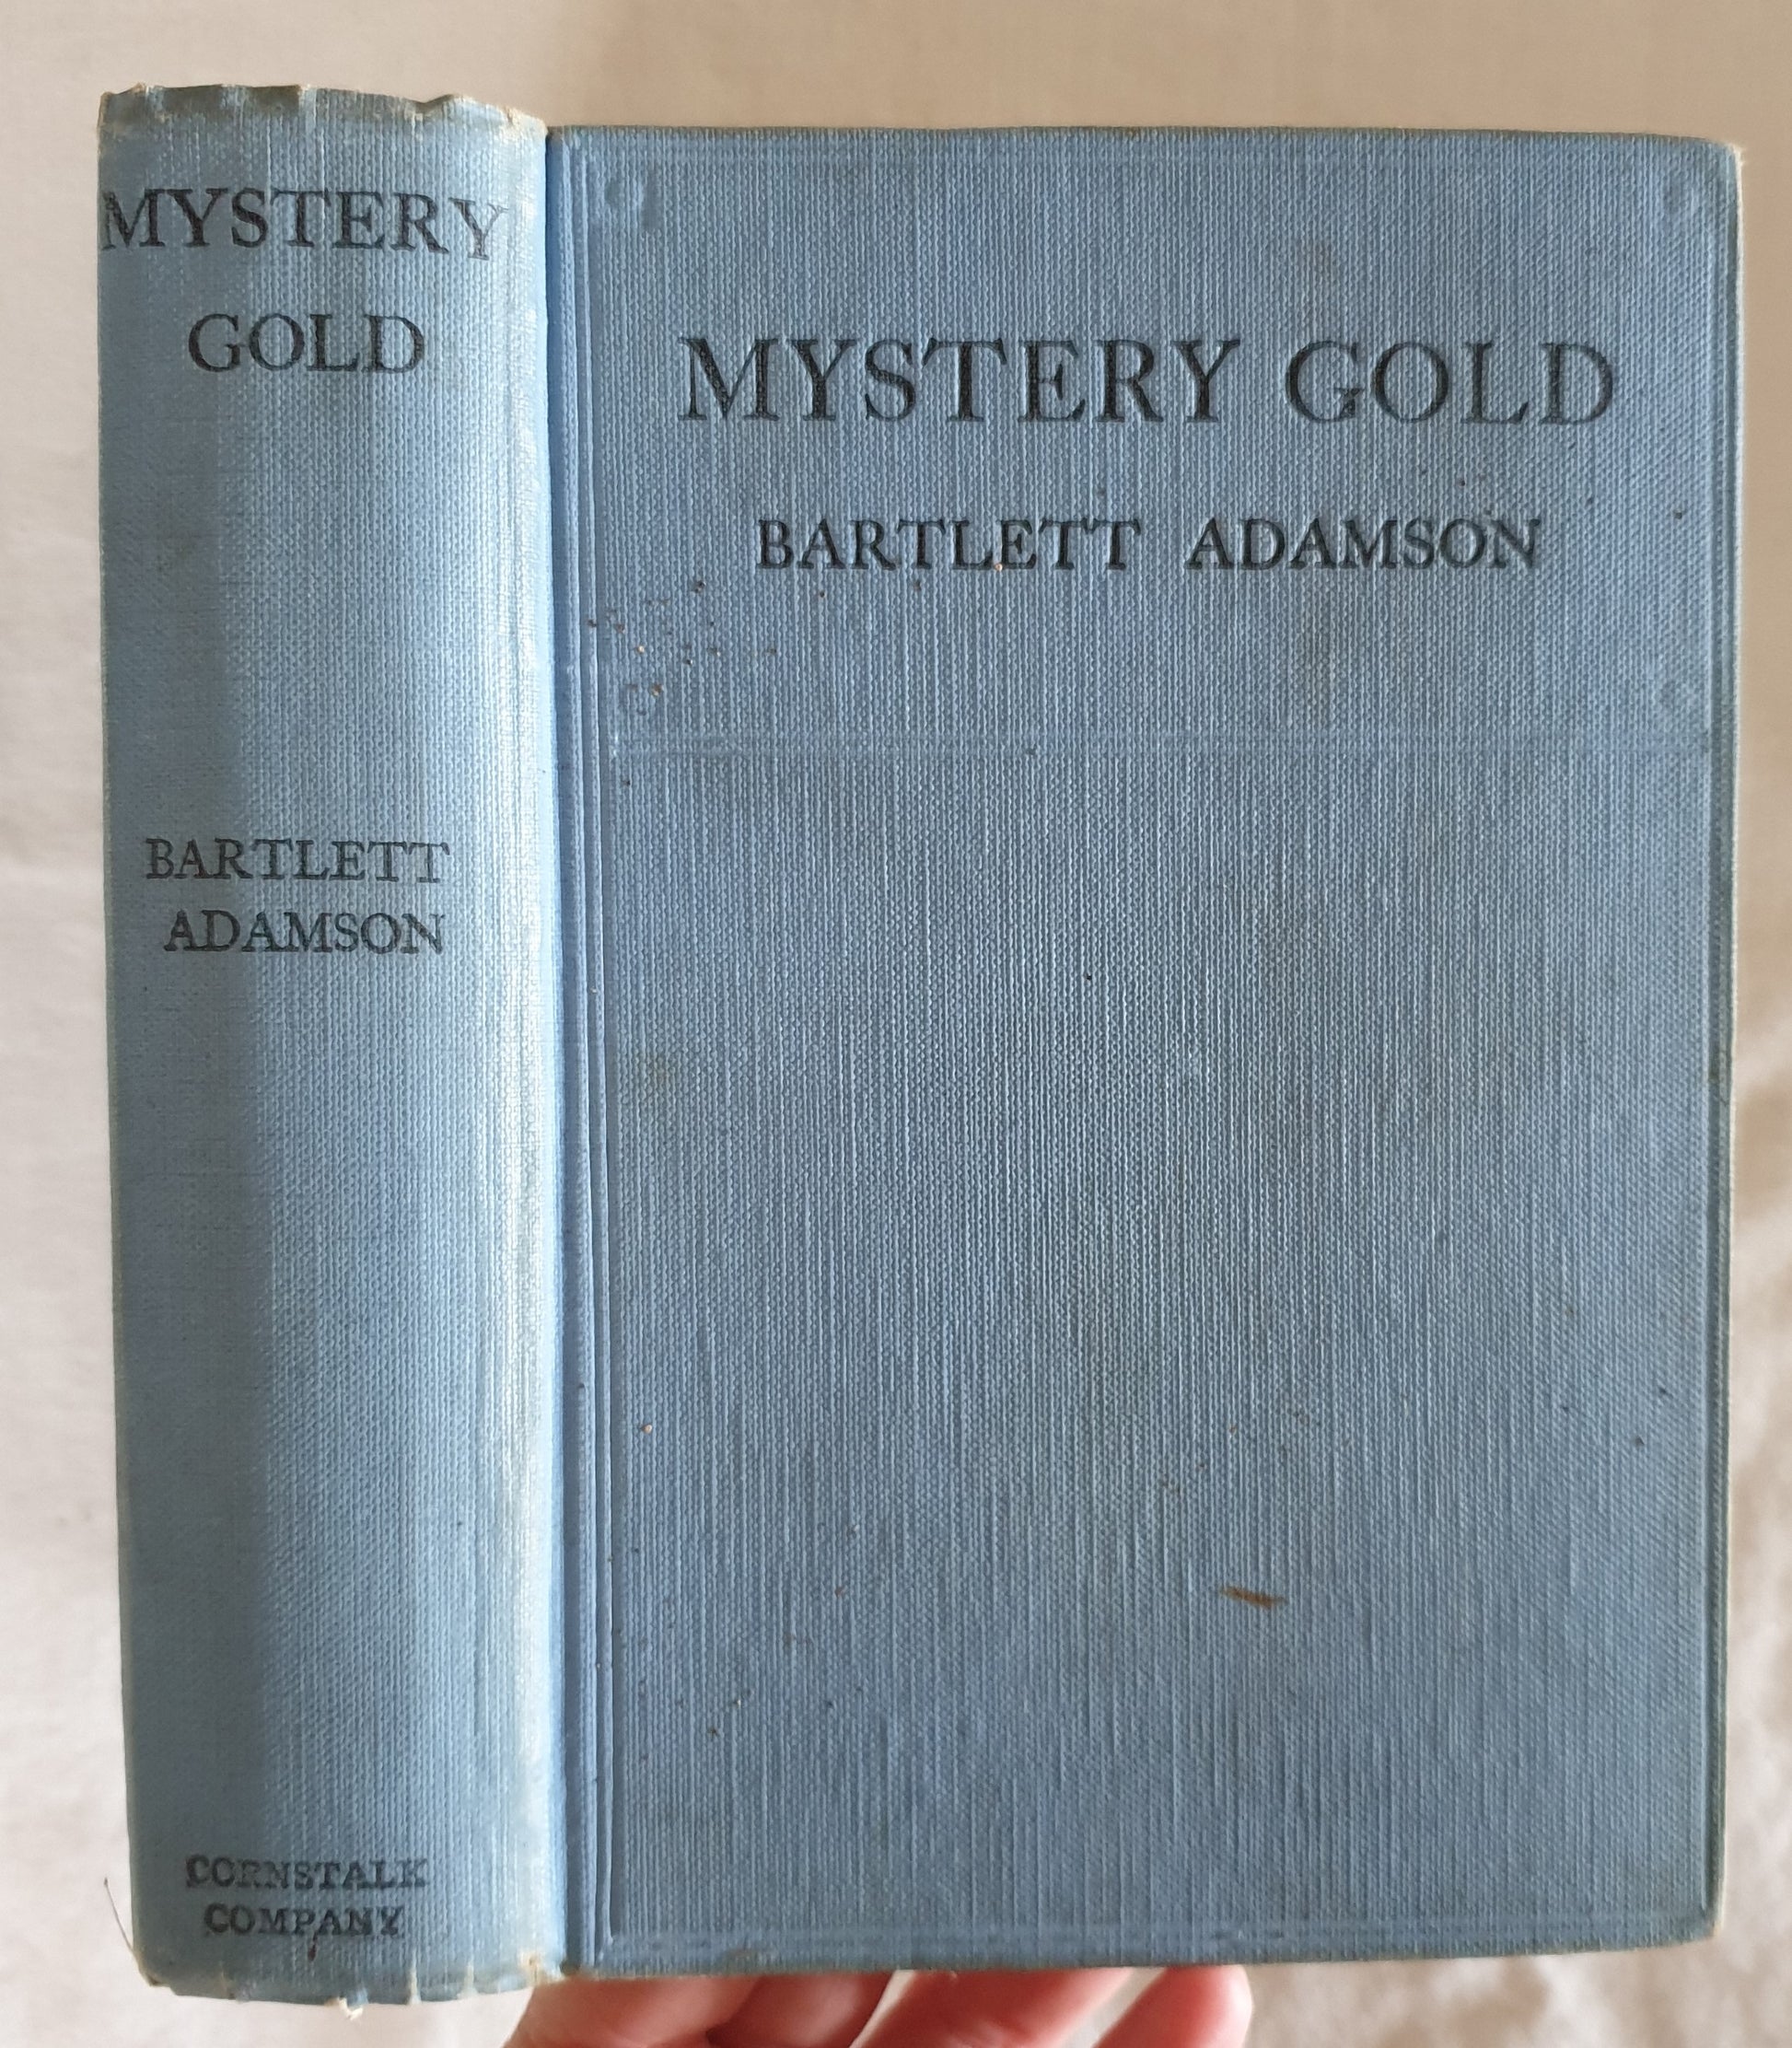 Mystery Gold by Bartlett Adamson